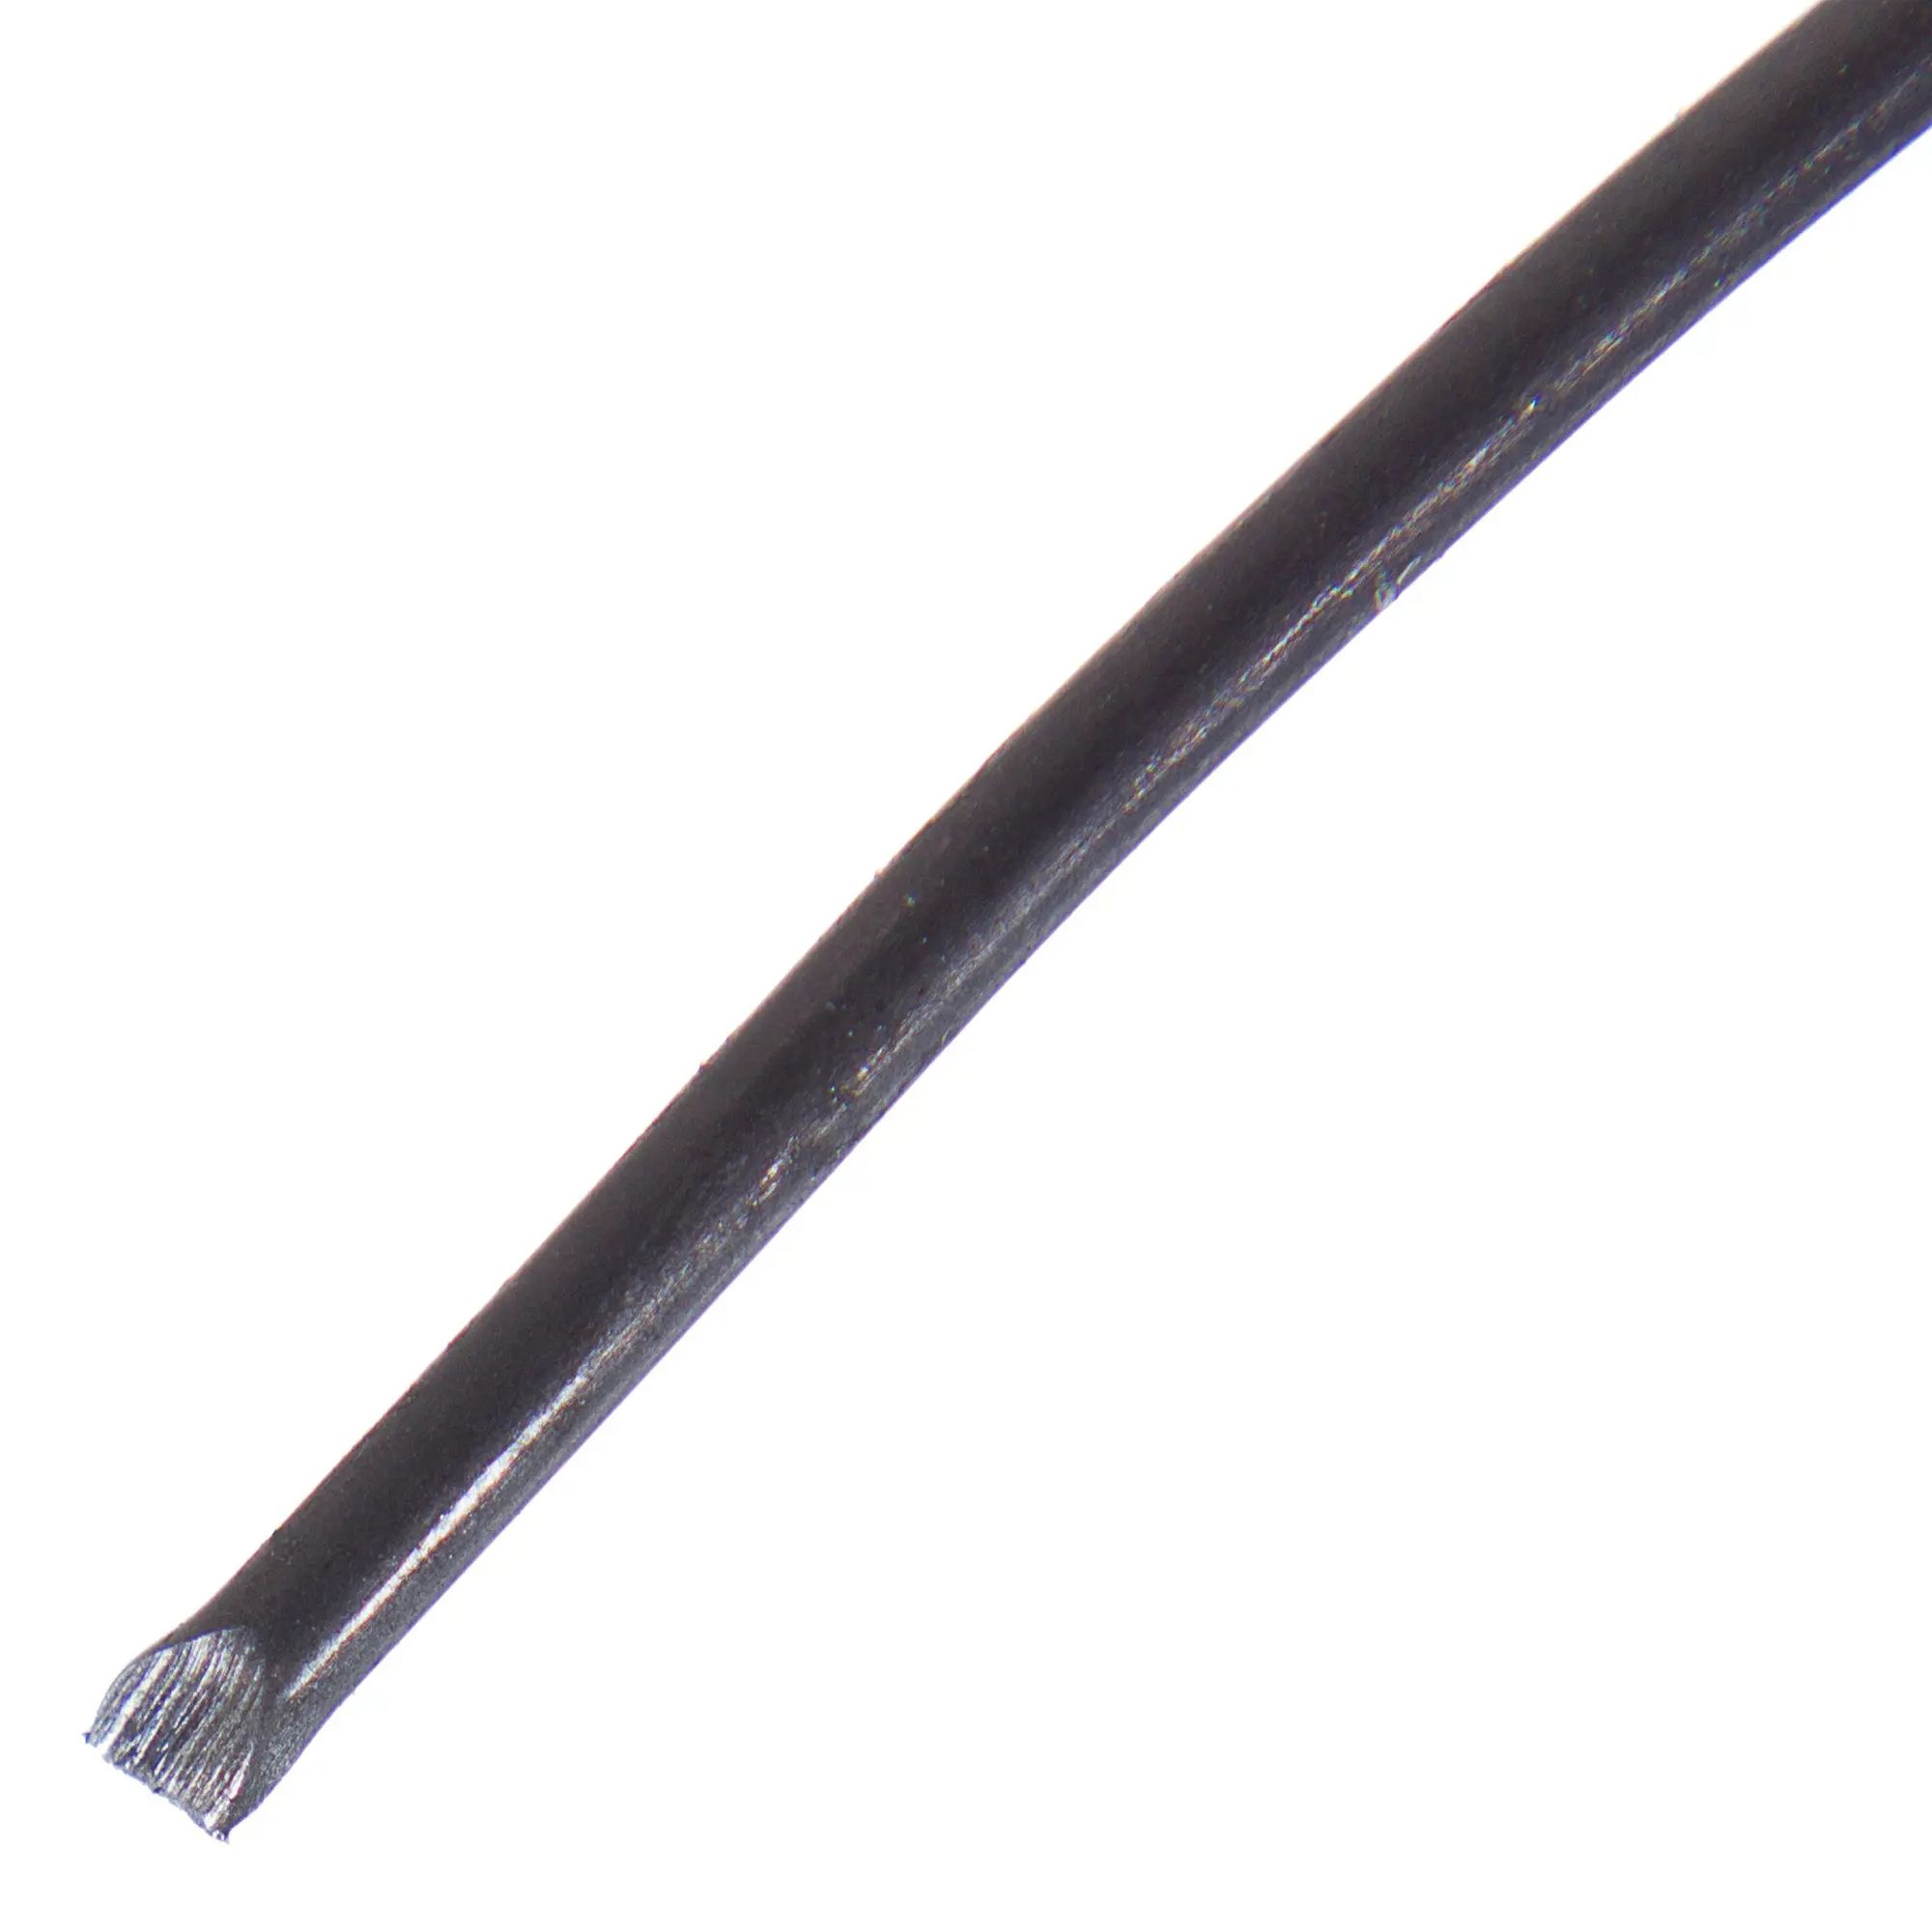 Вязальная проволока КРЕПКО-НАКРЕПКО, 47921, 1,2 мм, клубок, 200 г оцинкованная вязальная стальная проволока крепко накрепко